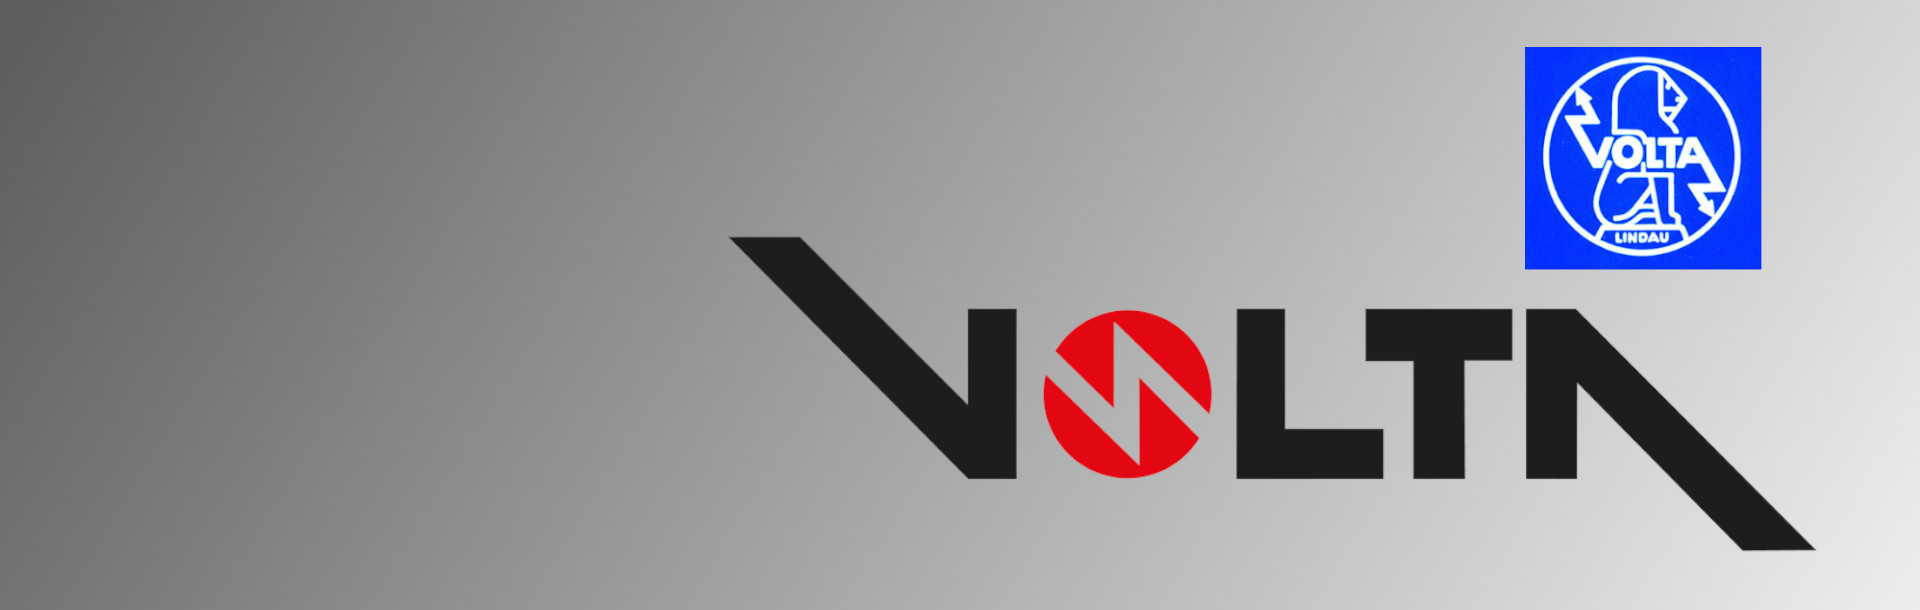 Volta-Historie-Firmengeschichte